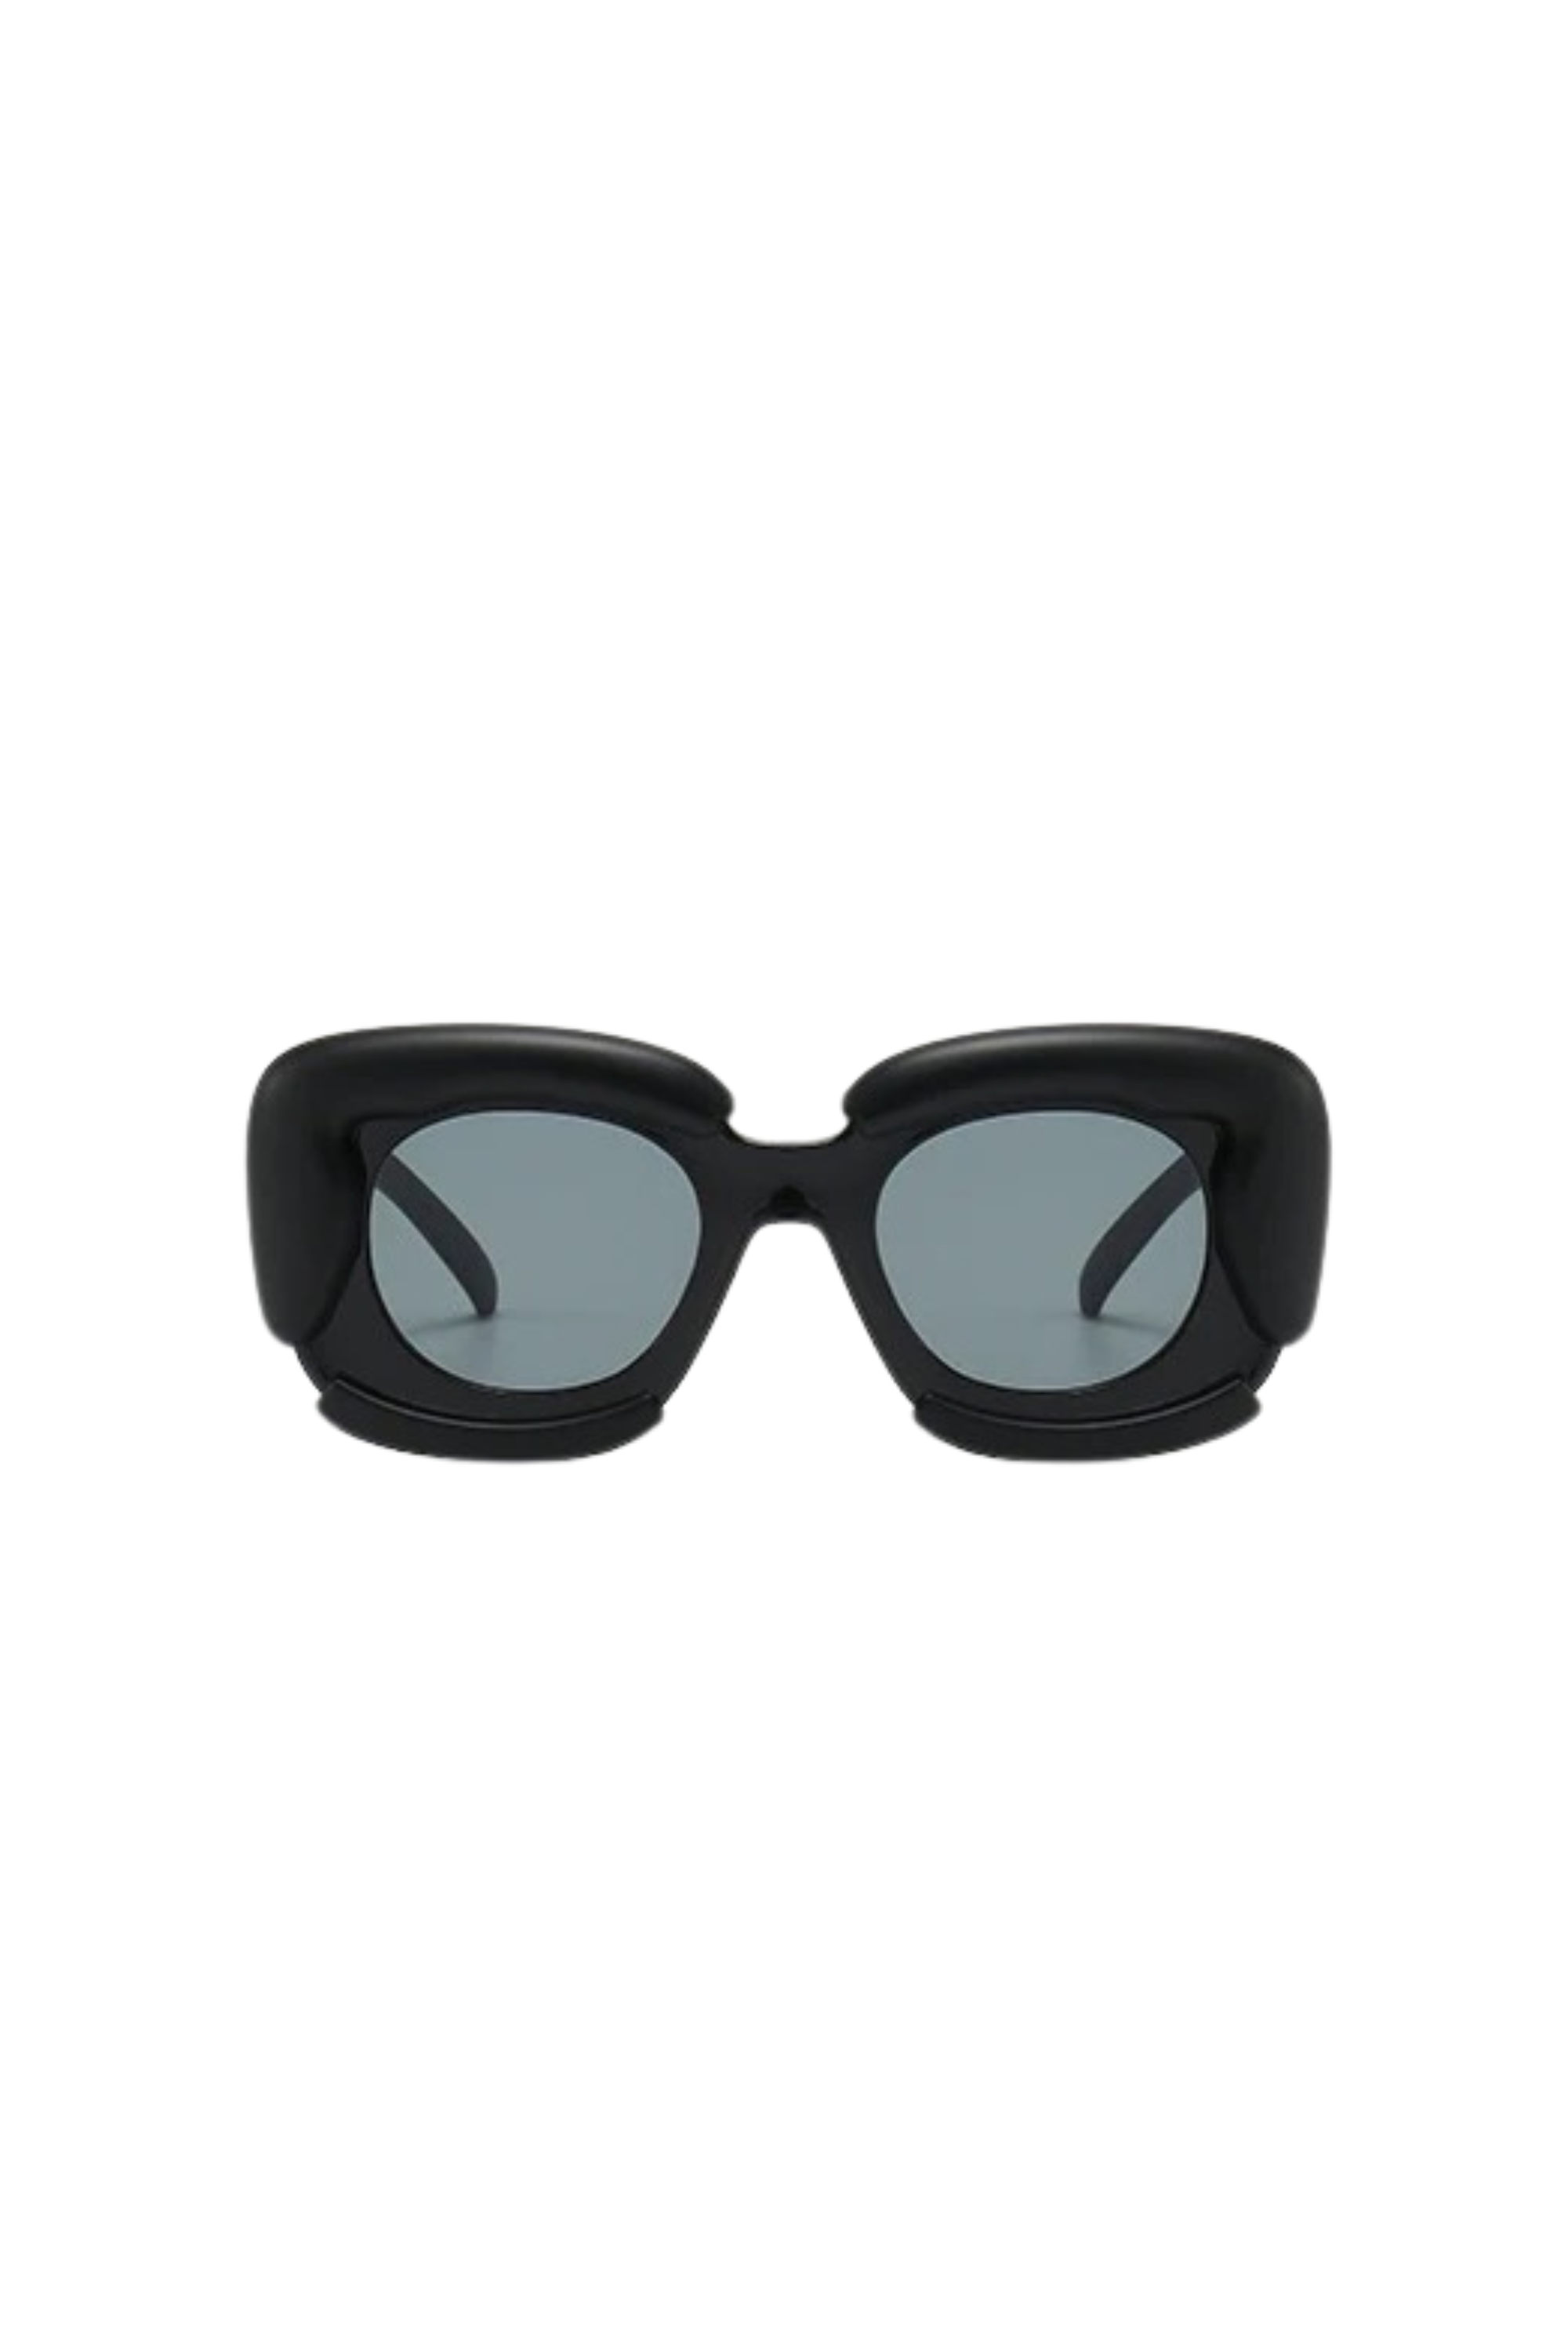 GOLDxTEAL modern black chunky frame sunglasses.